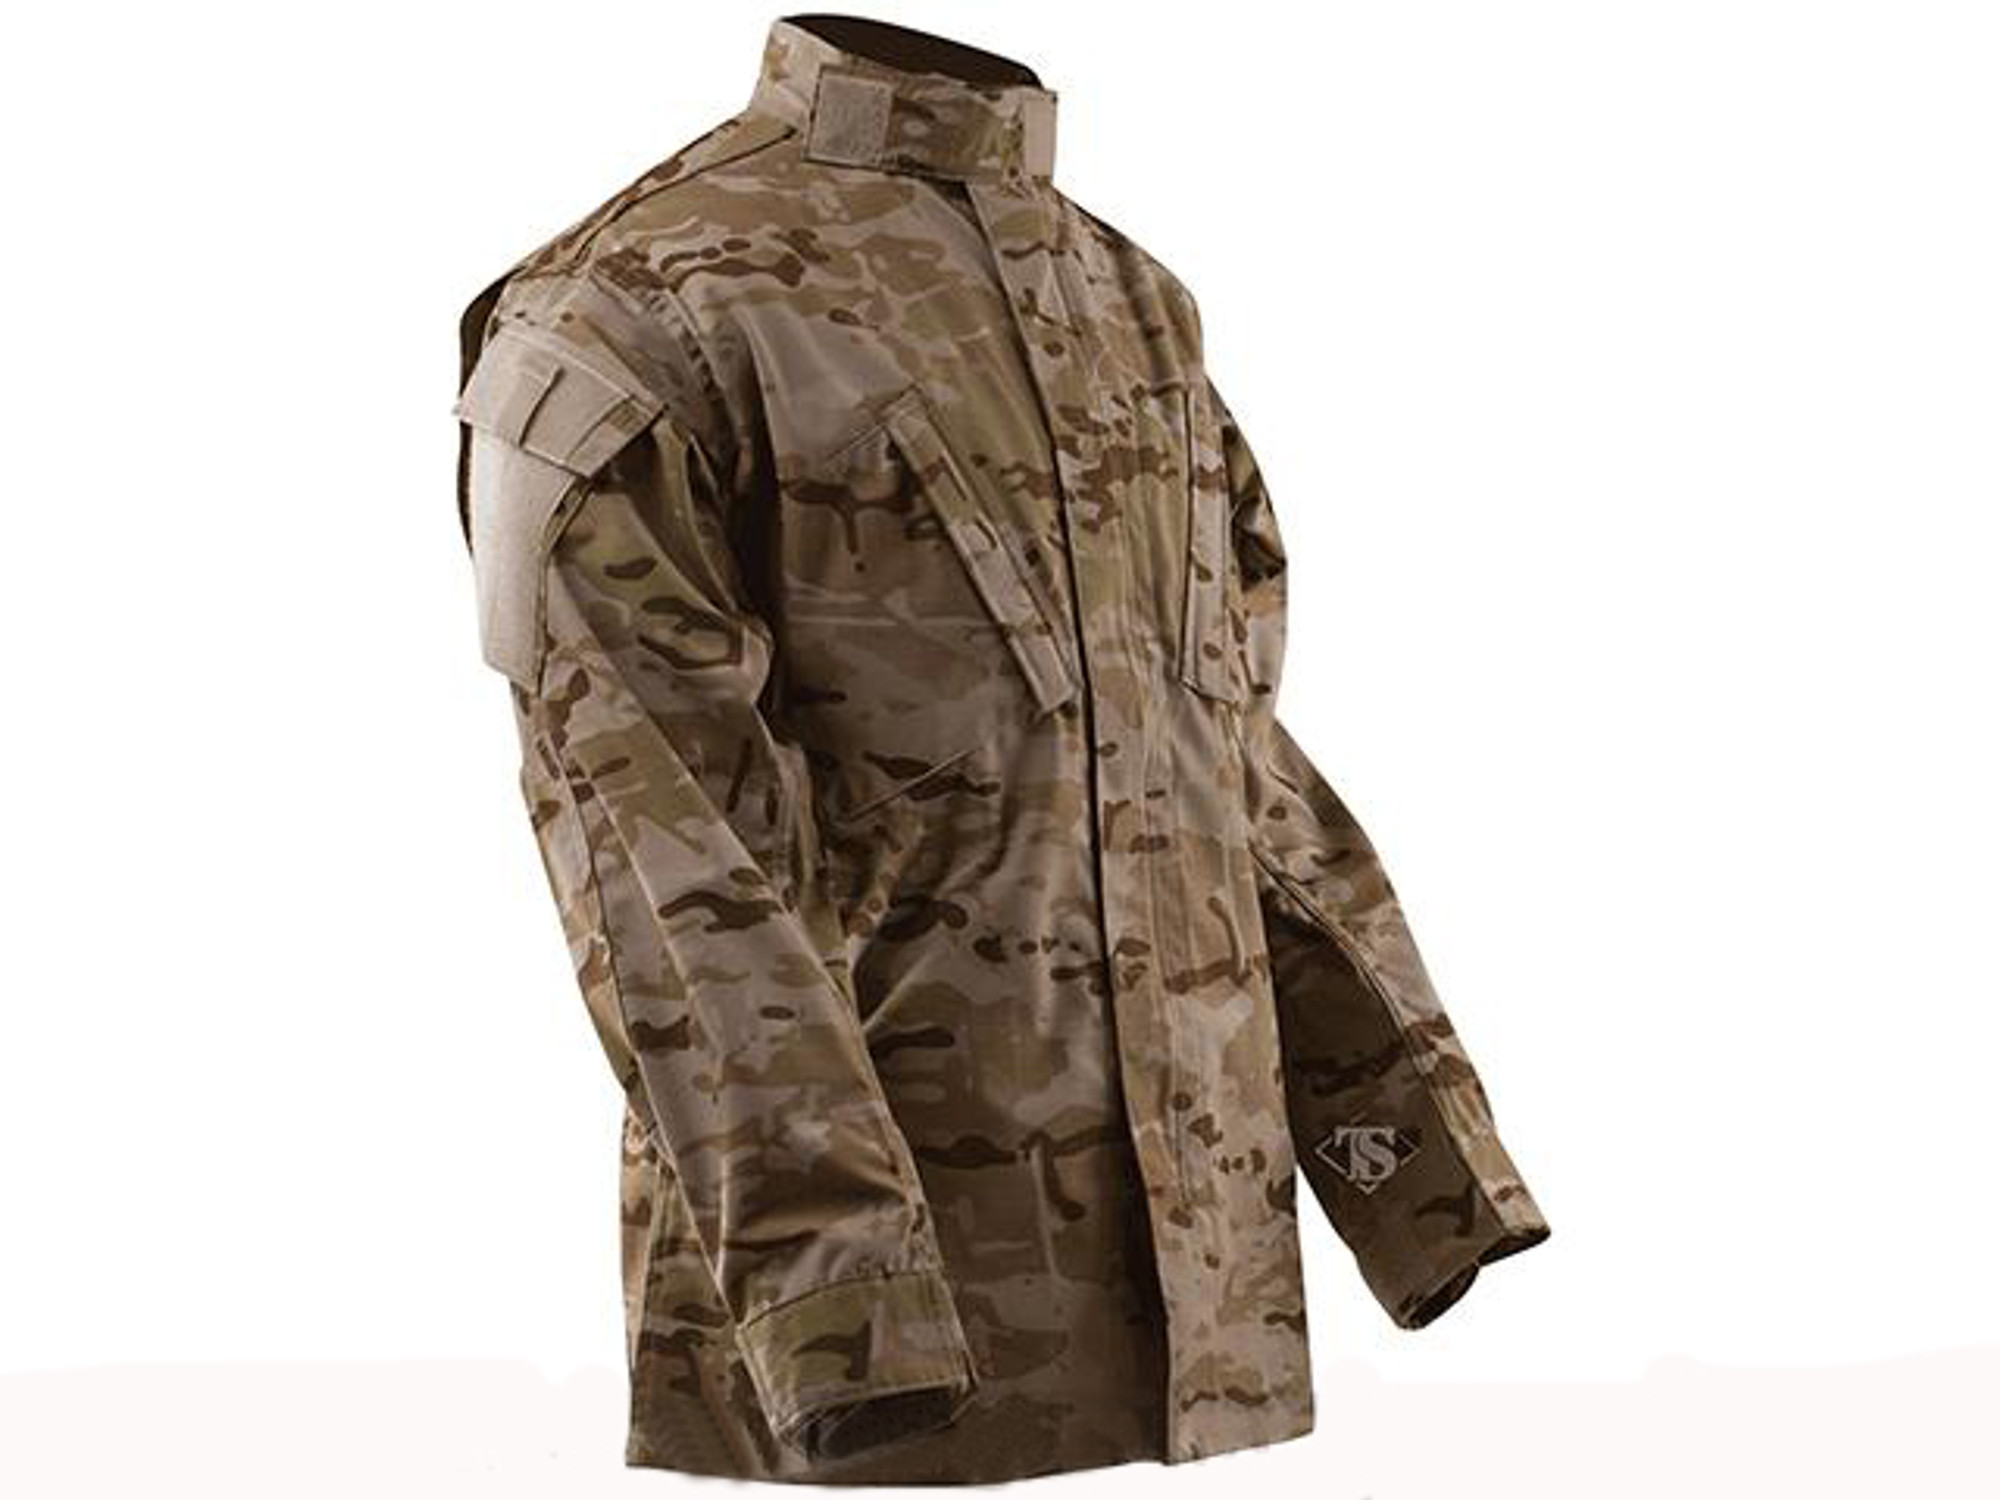 Tru-Spec Tactical Response Uniform Shirt - Multicam Arid (Size: Small-Regular)